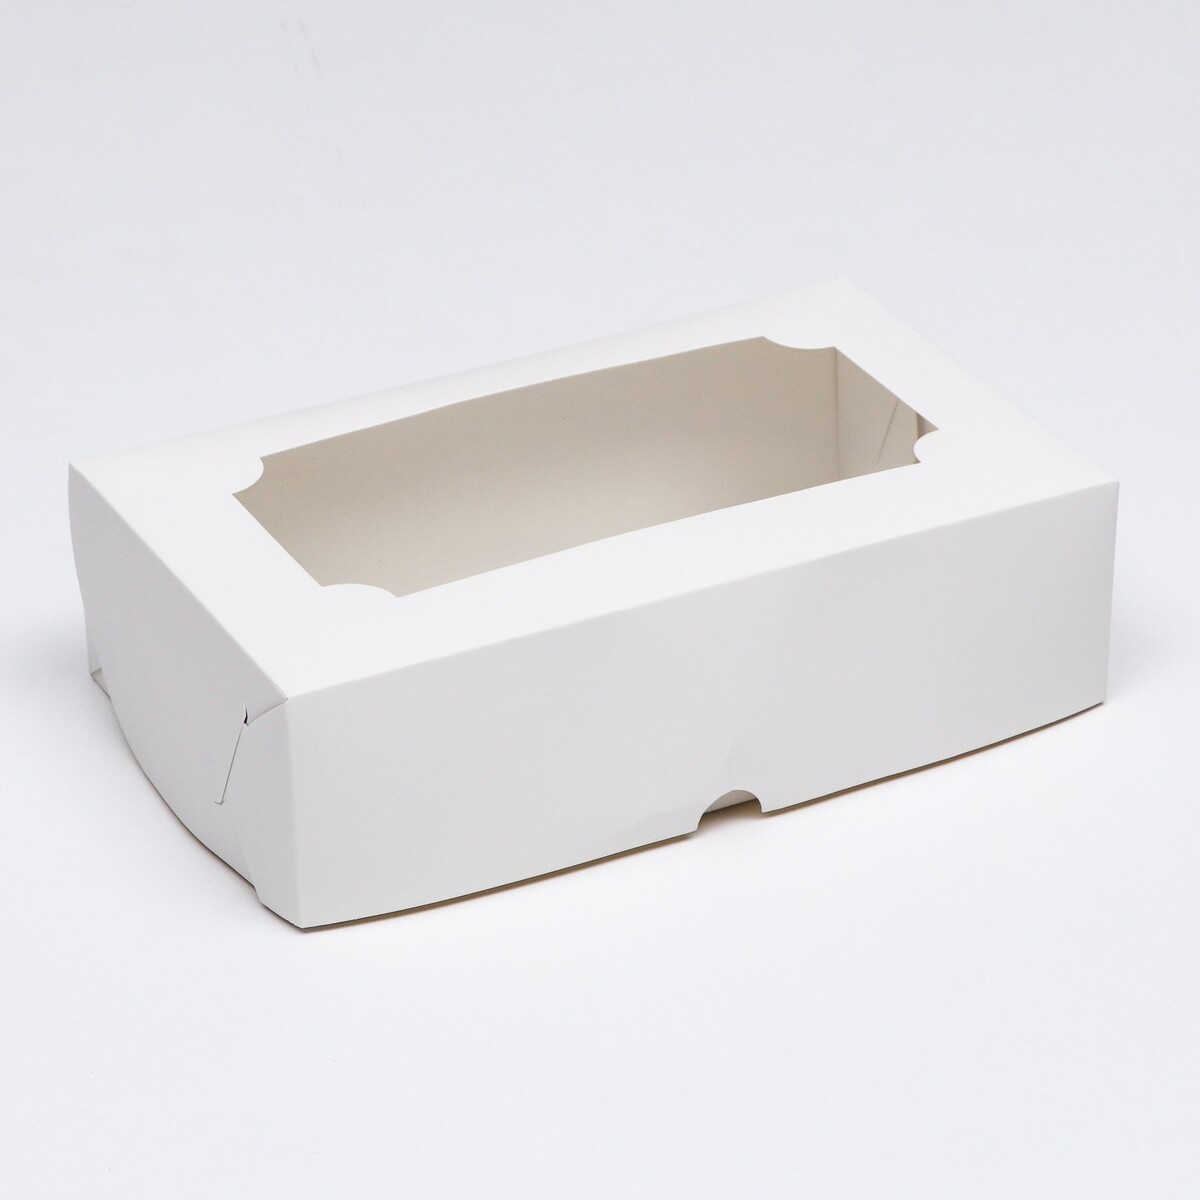 Коробка складная с окном под зефир, белый, 25 х 15 х 7 см коробка складная с окном под рулет голубая 26 х 10 х 8 см